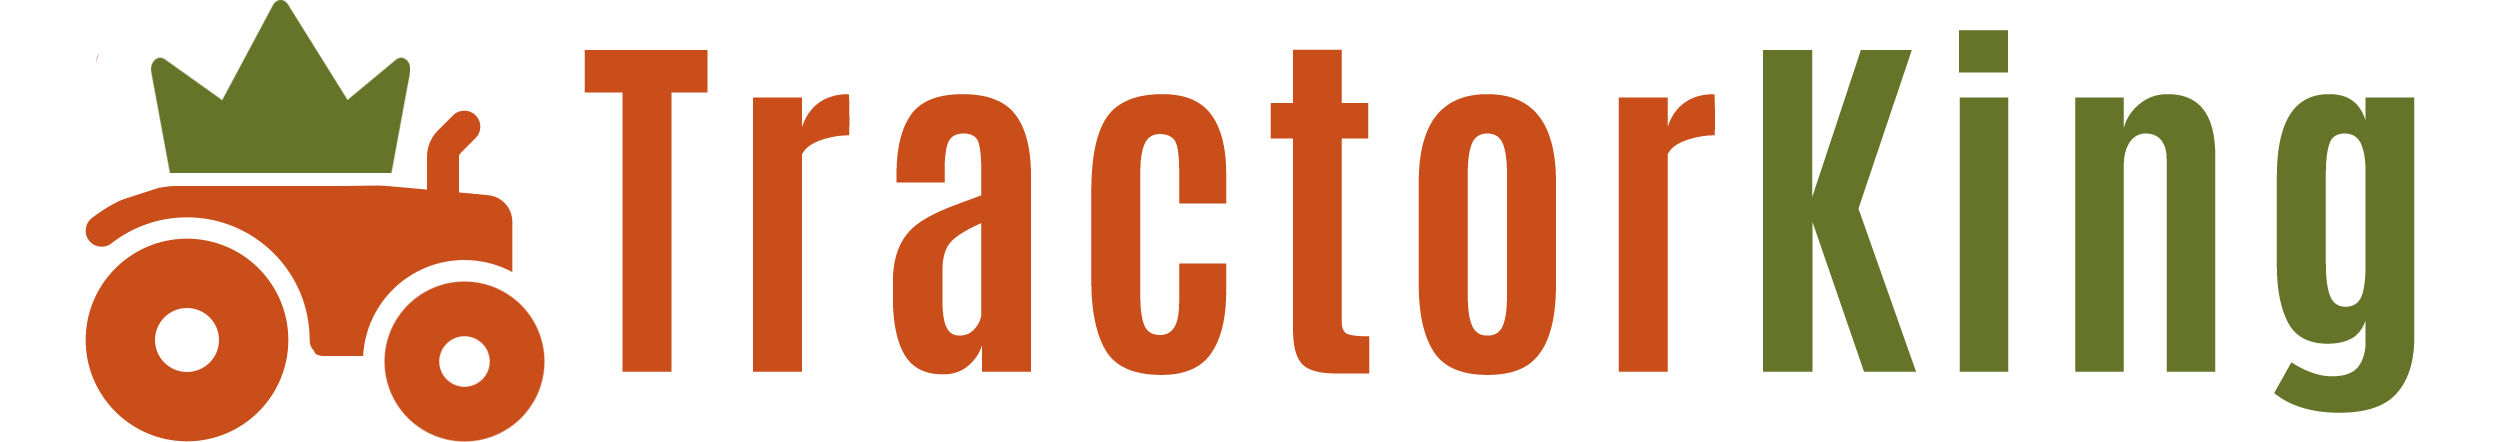 Tractor King Logo